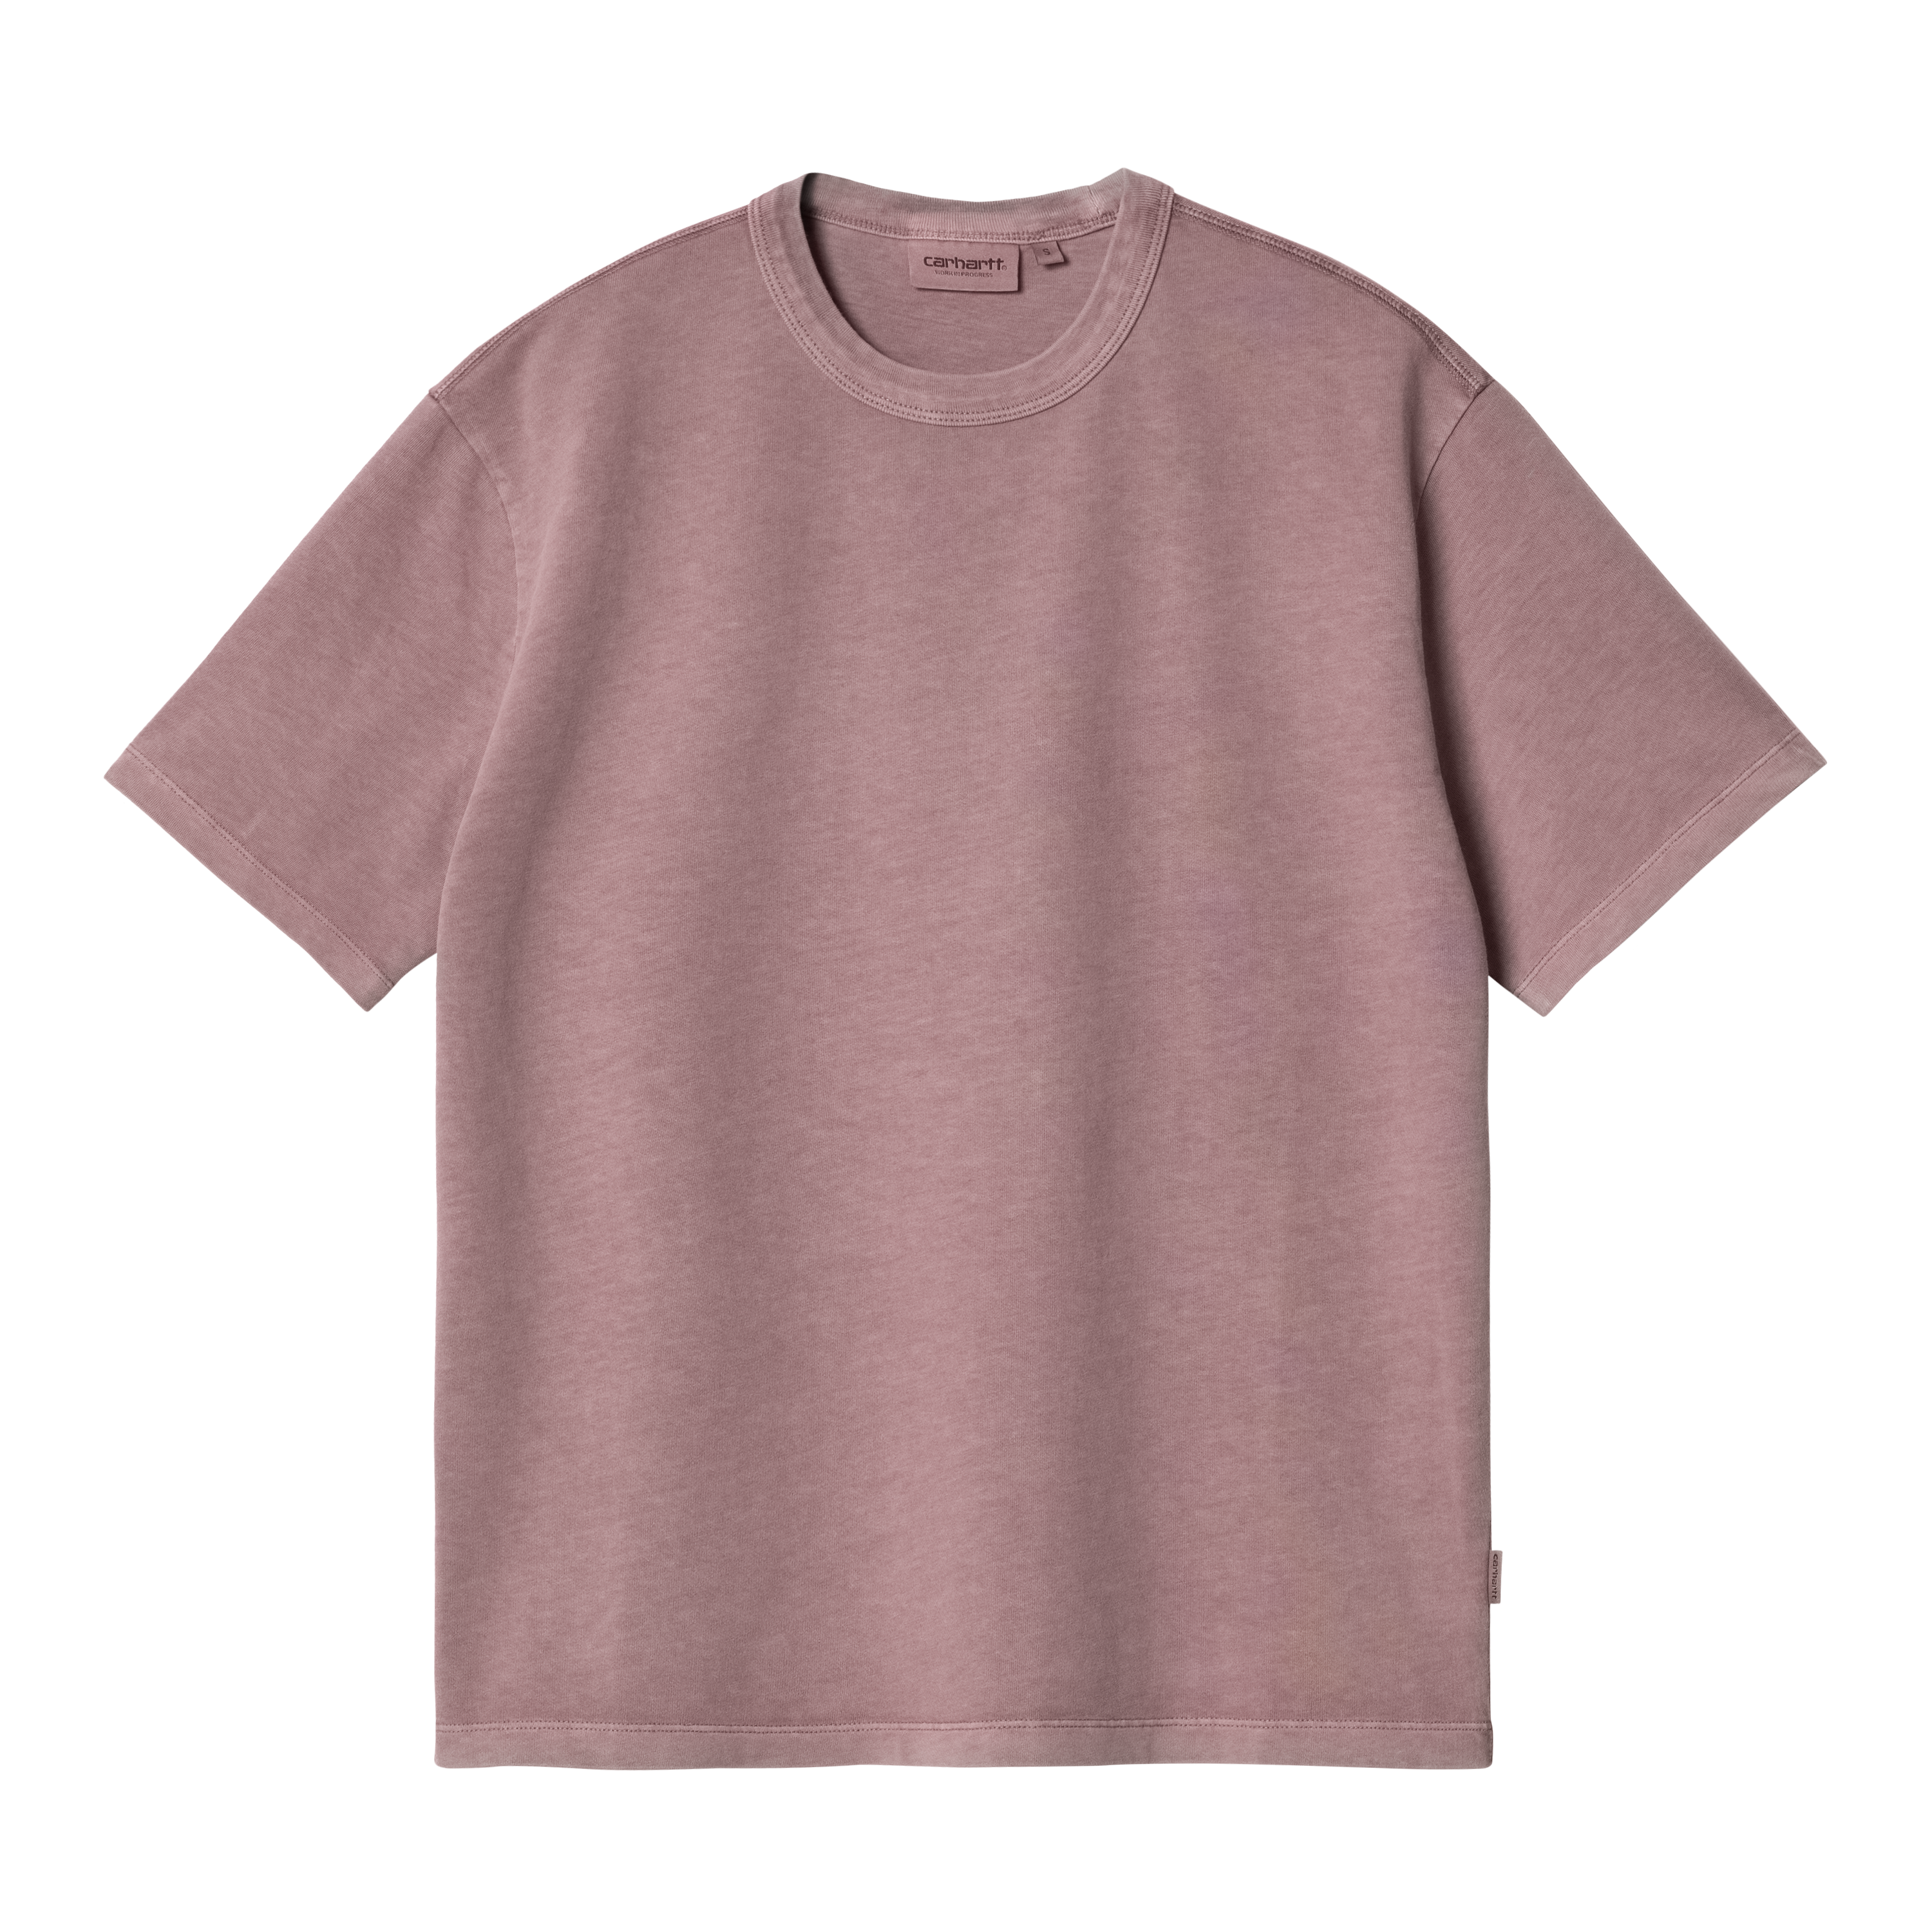 Carhartt WIP Women’s Short Sleeve Taos T-Shirt in Pink